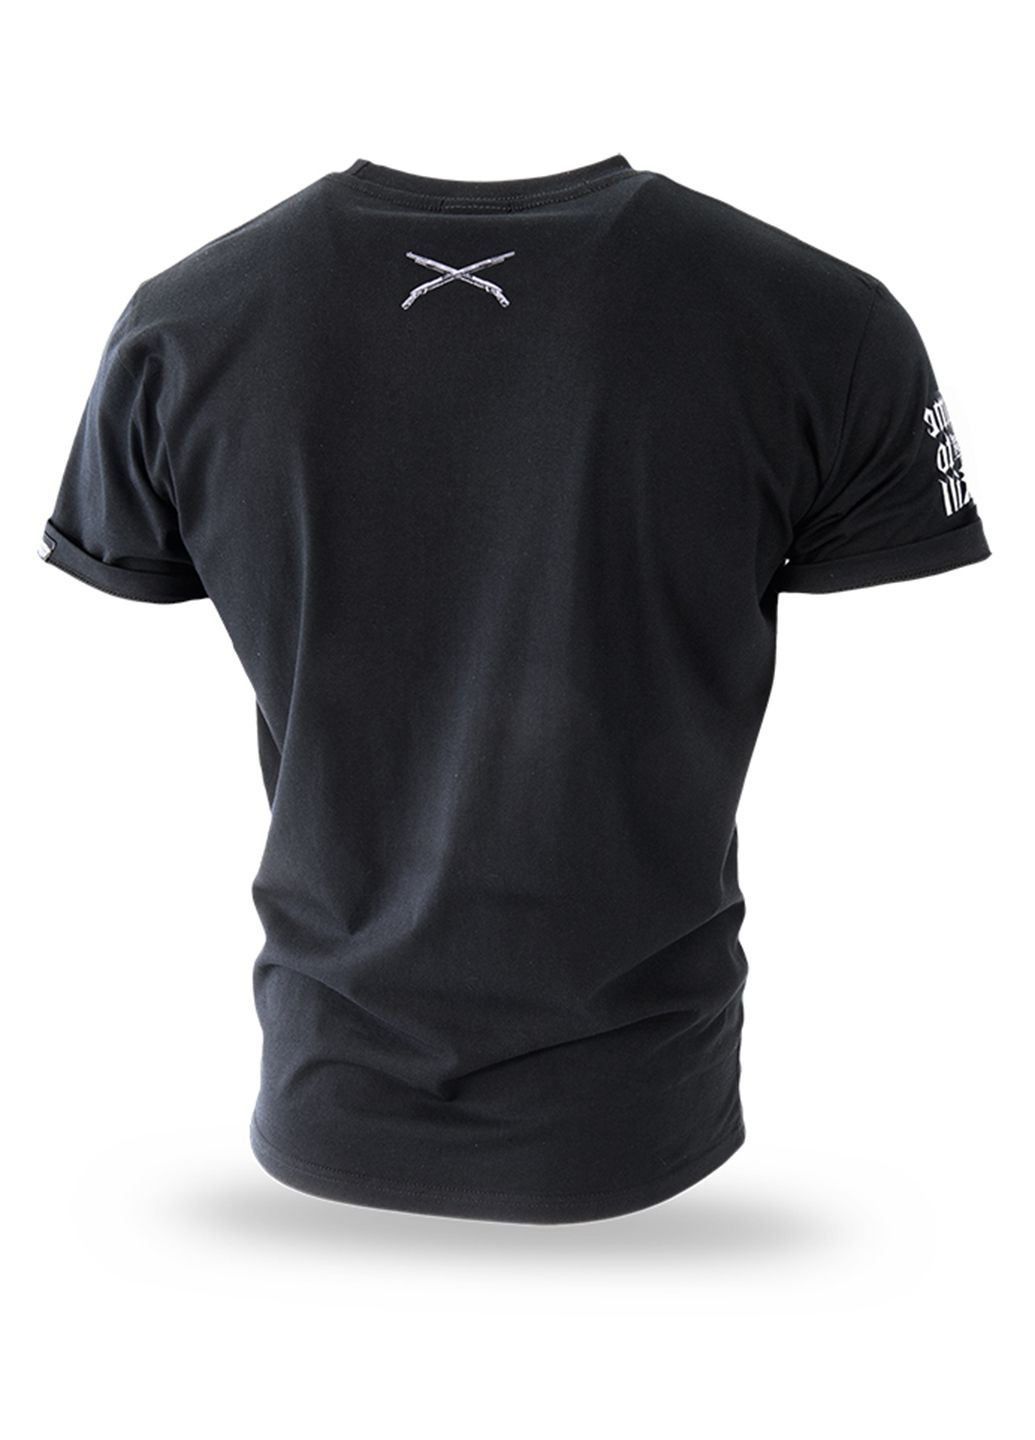 Черная футболка мужская Dobermans Aggressive